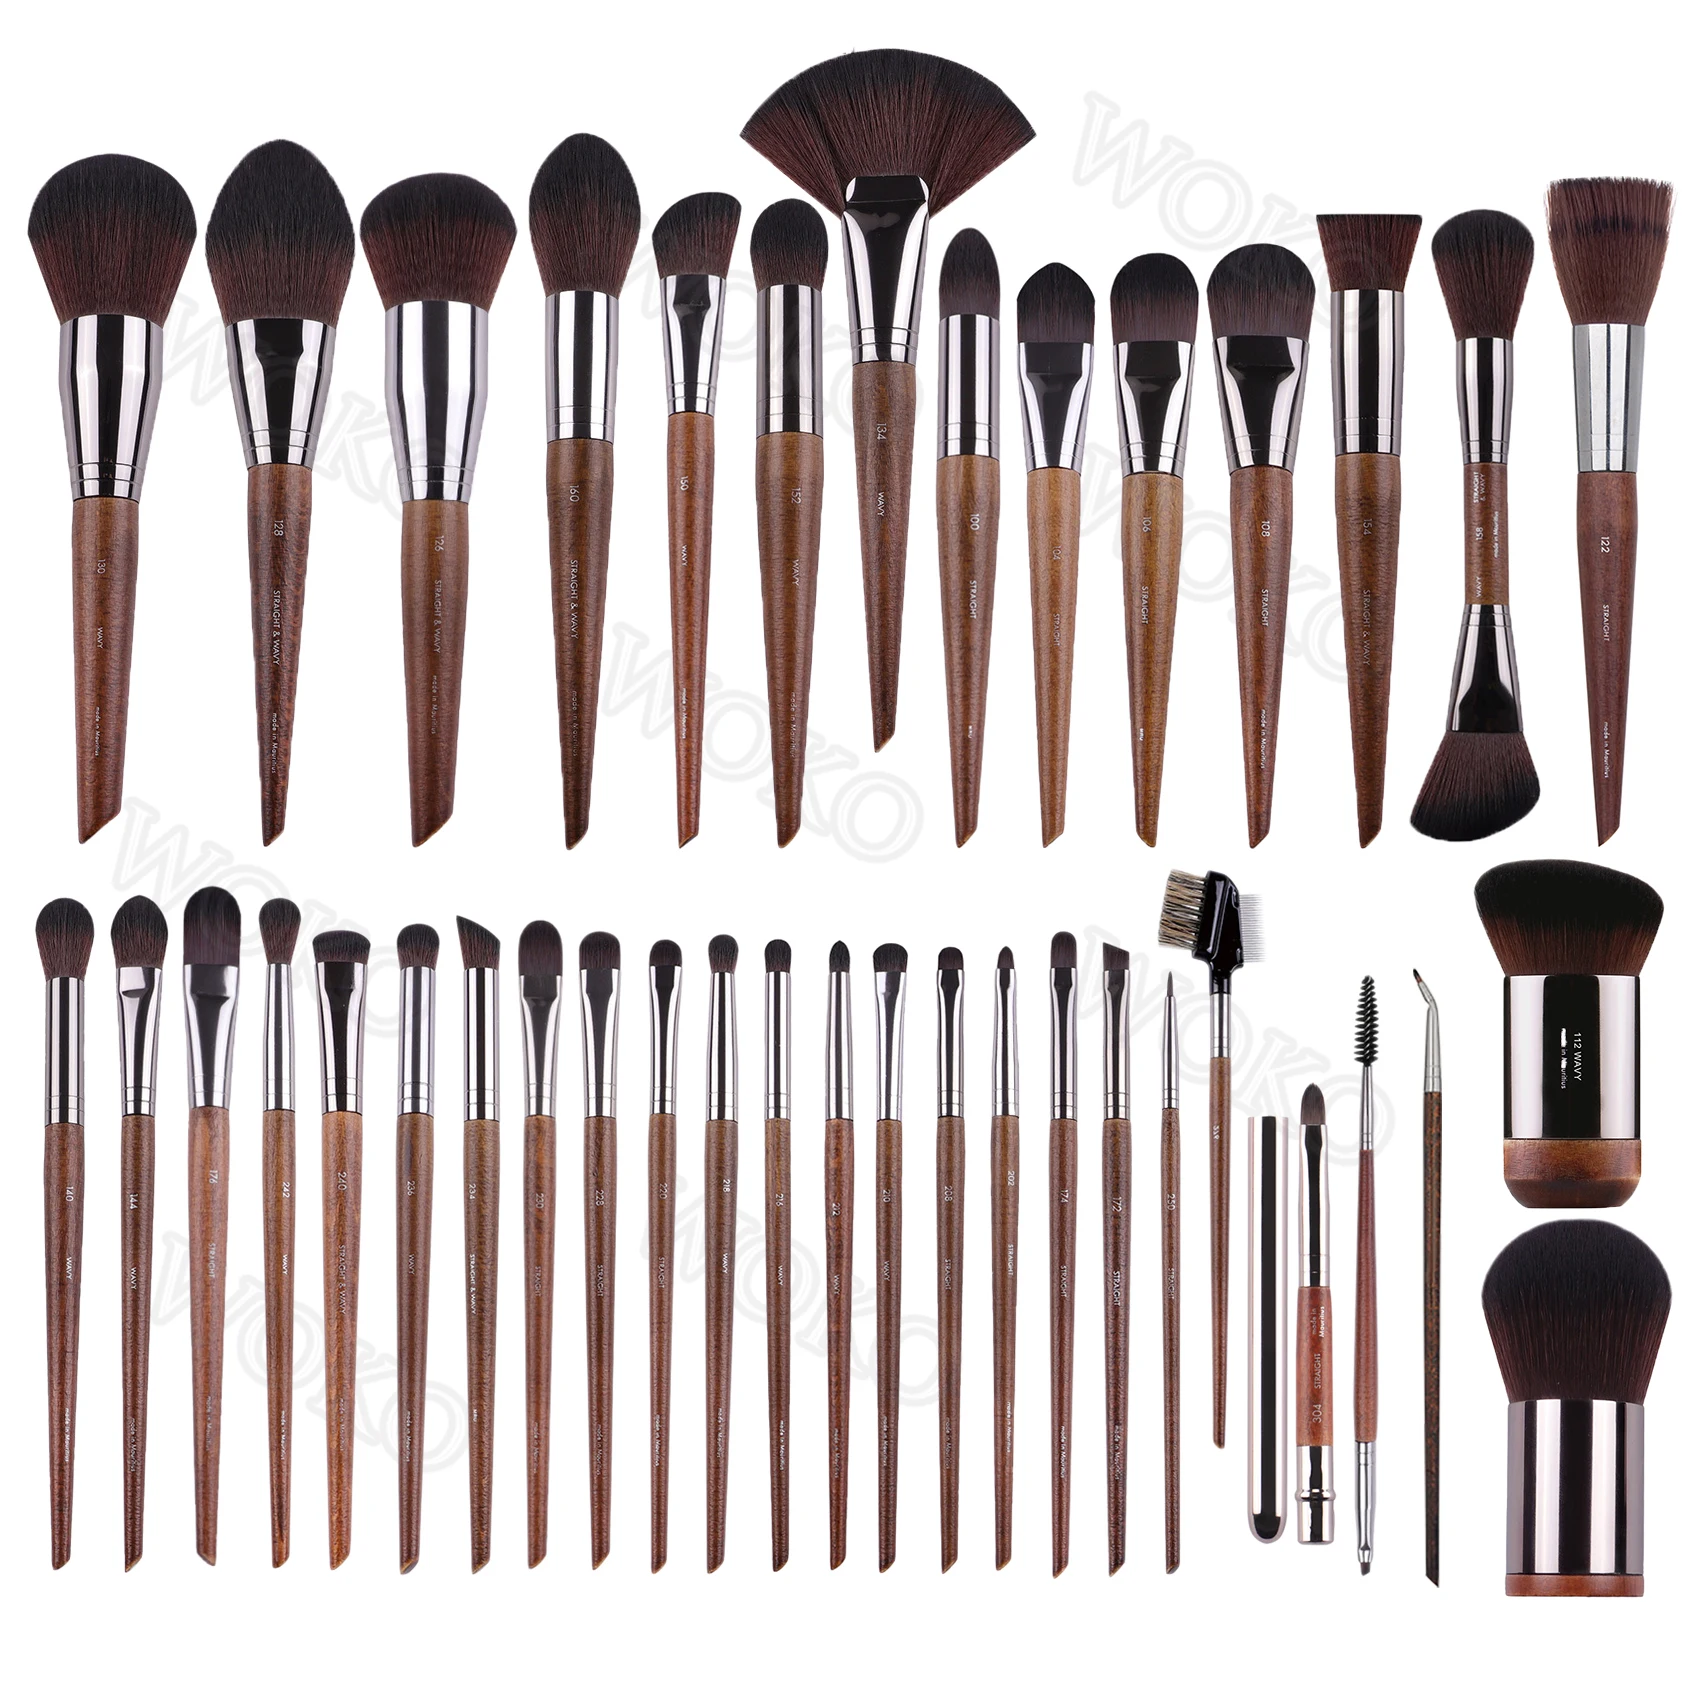 

7-39 Pcs MUF Series Makeup Brush Set Powder Foundation Blush Contour Concealer Bronzer Eyeliner Shadow Smudge Brow Makeup Tool